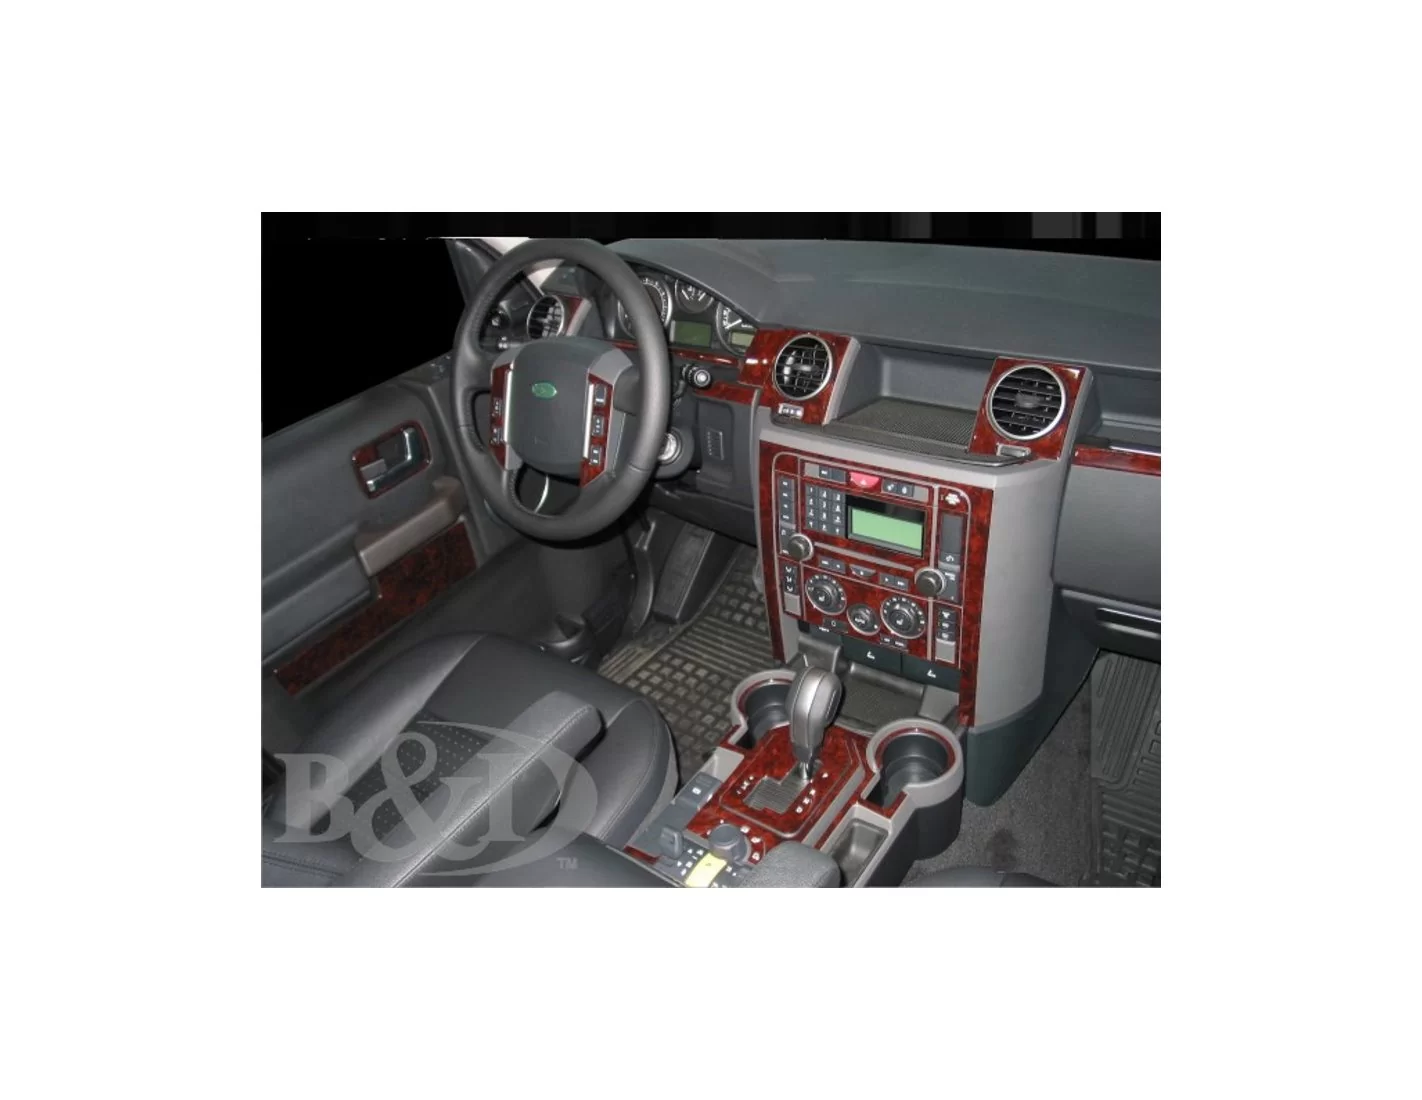 Land Rover Discovery 3 2005-UP Full Set BD Interieur Dashboard Bekleding Volhouder